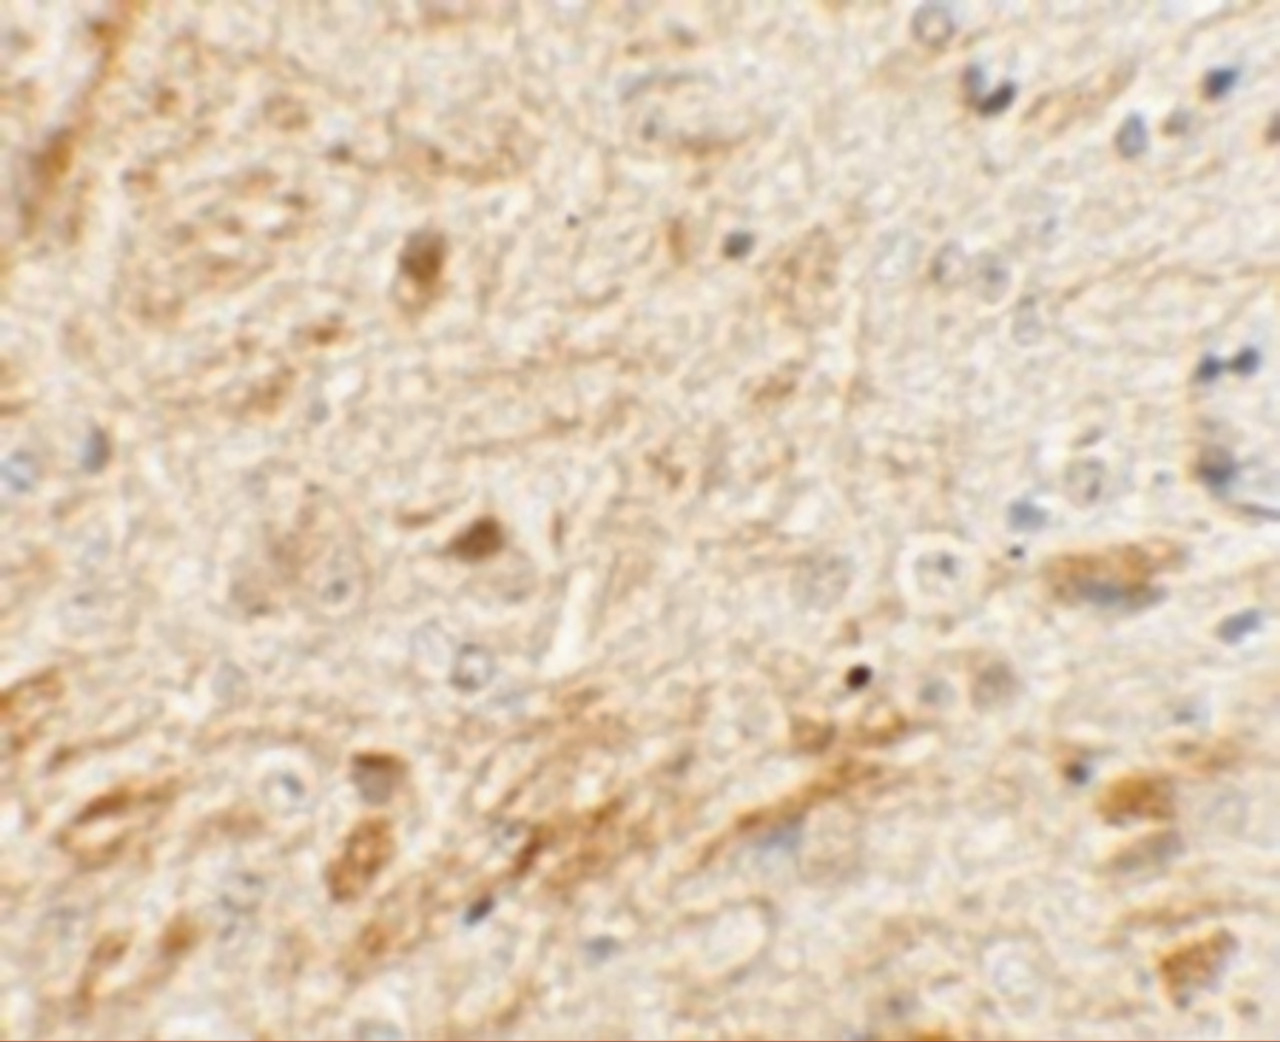 Immunohistochemistry of TMEM106A in mouse brain tissue with TMEM106A antibody at 5 ug/mL.